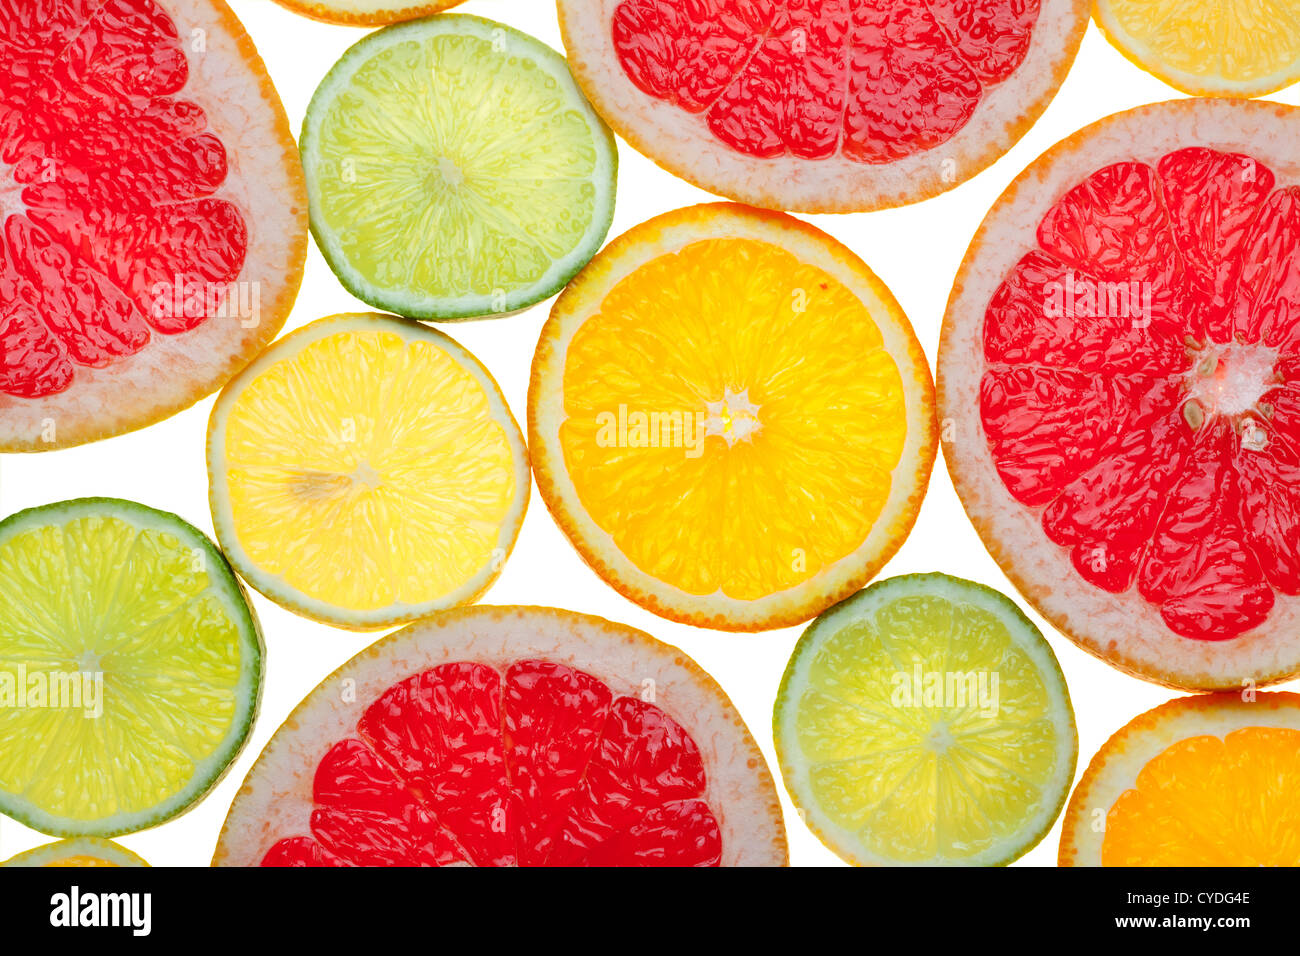 Citrus food background: Grapefruit, Lime, Lemon, Orange slices Stock Photo